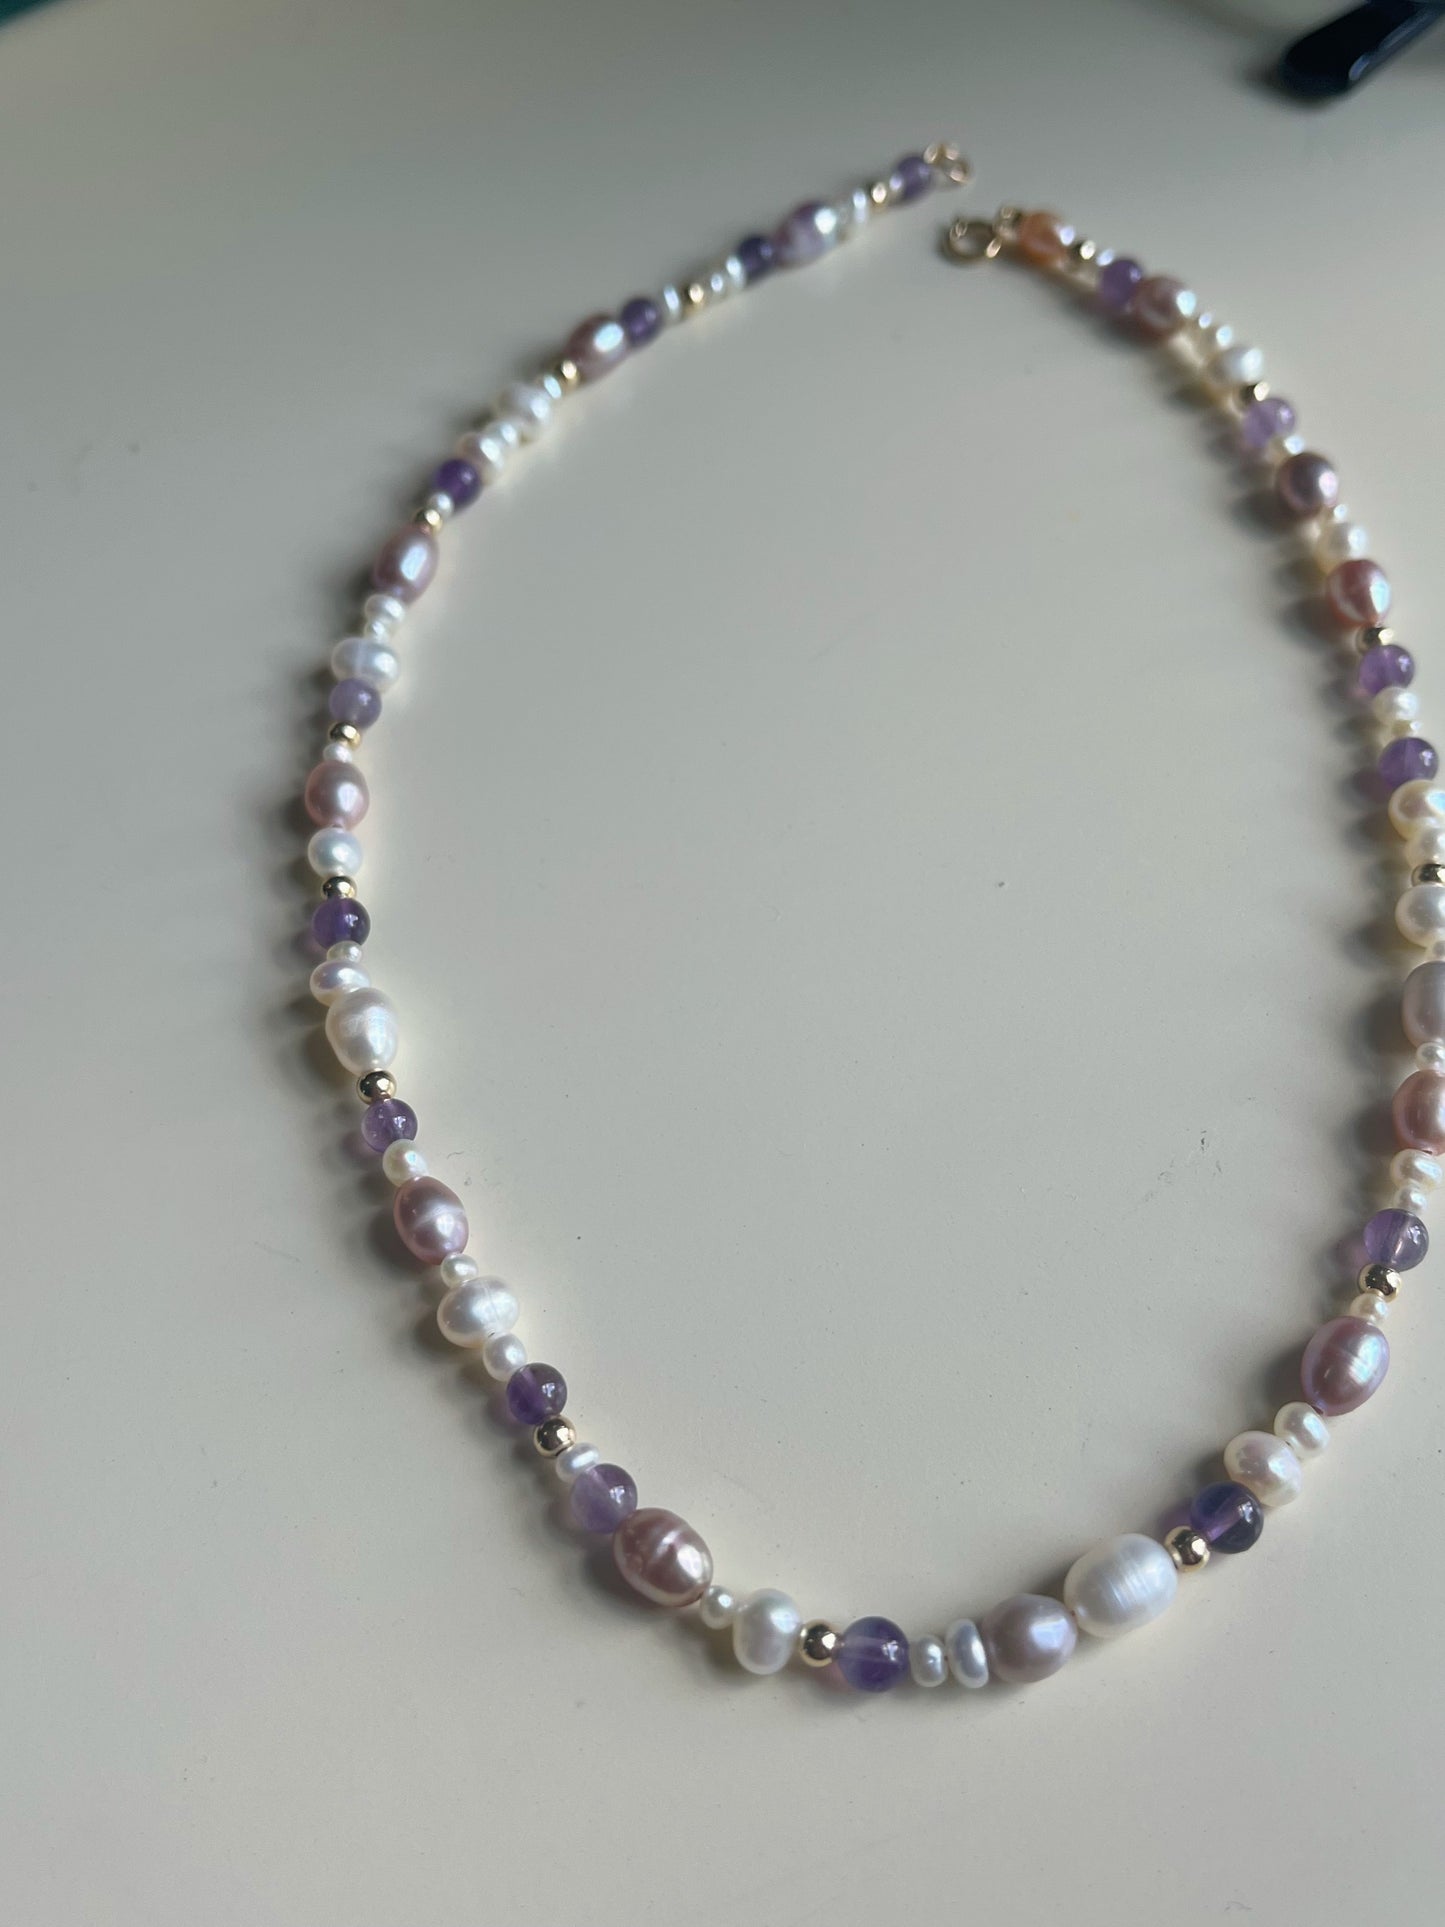 Unique beaded necklace